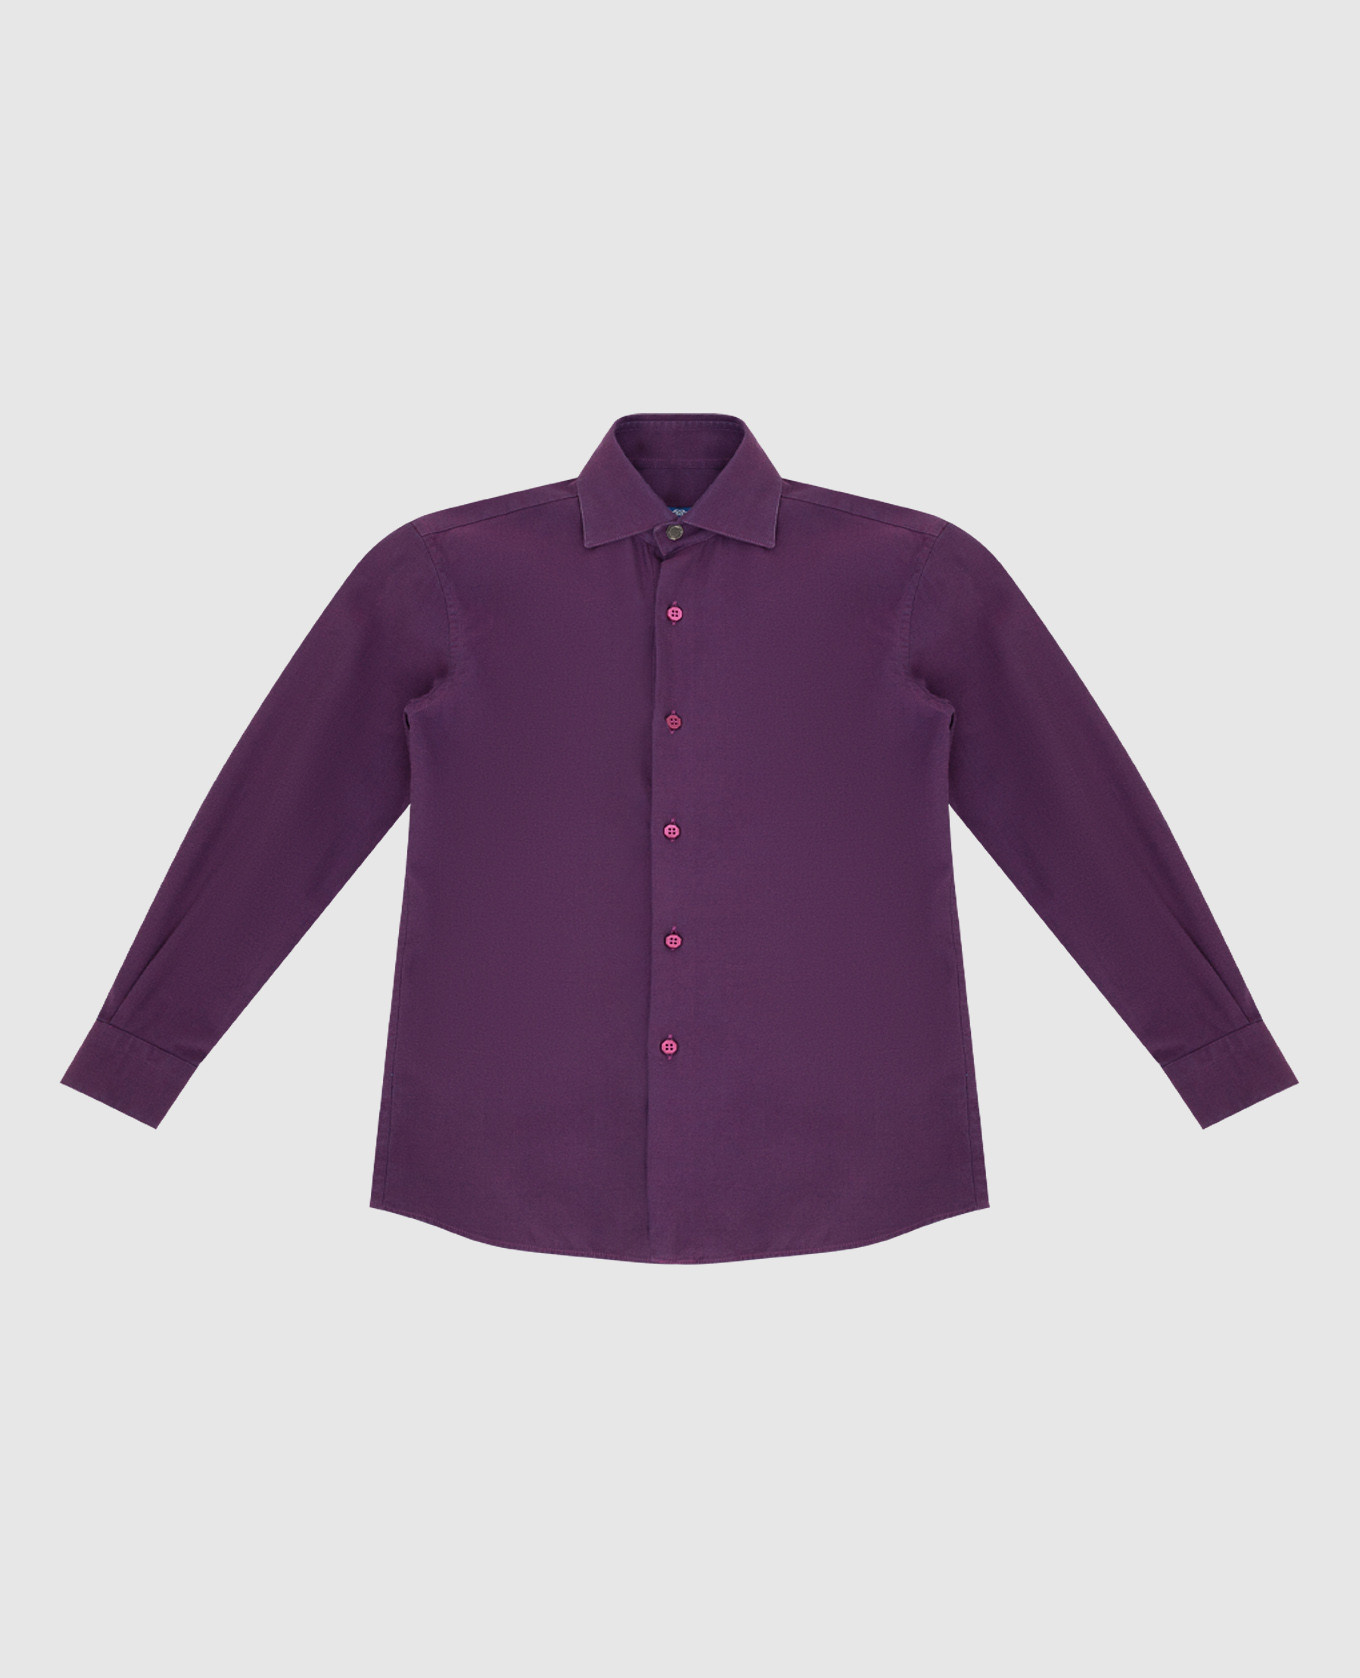 Children's purple shirt